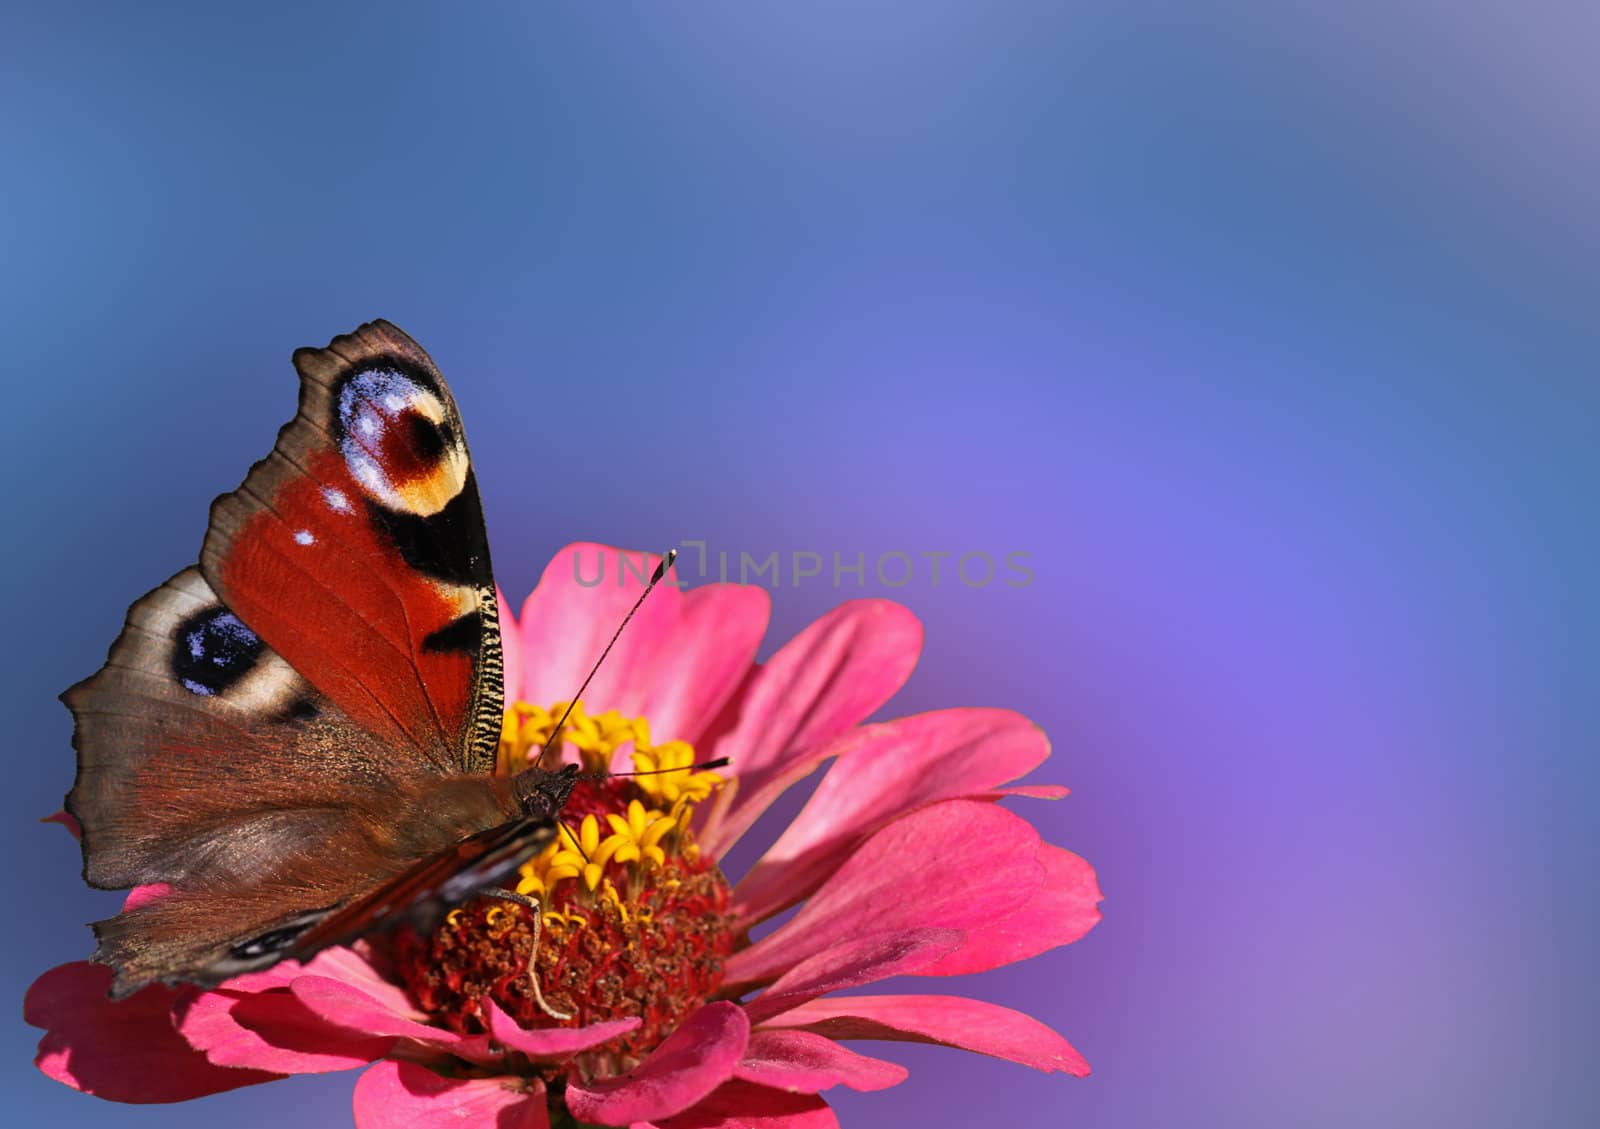 butterfly (european peacock) sitting on flower (zinnia)